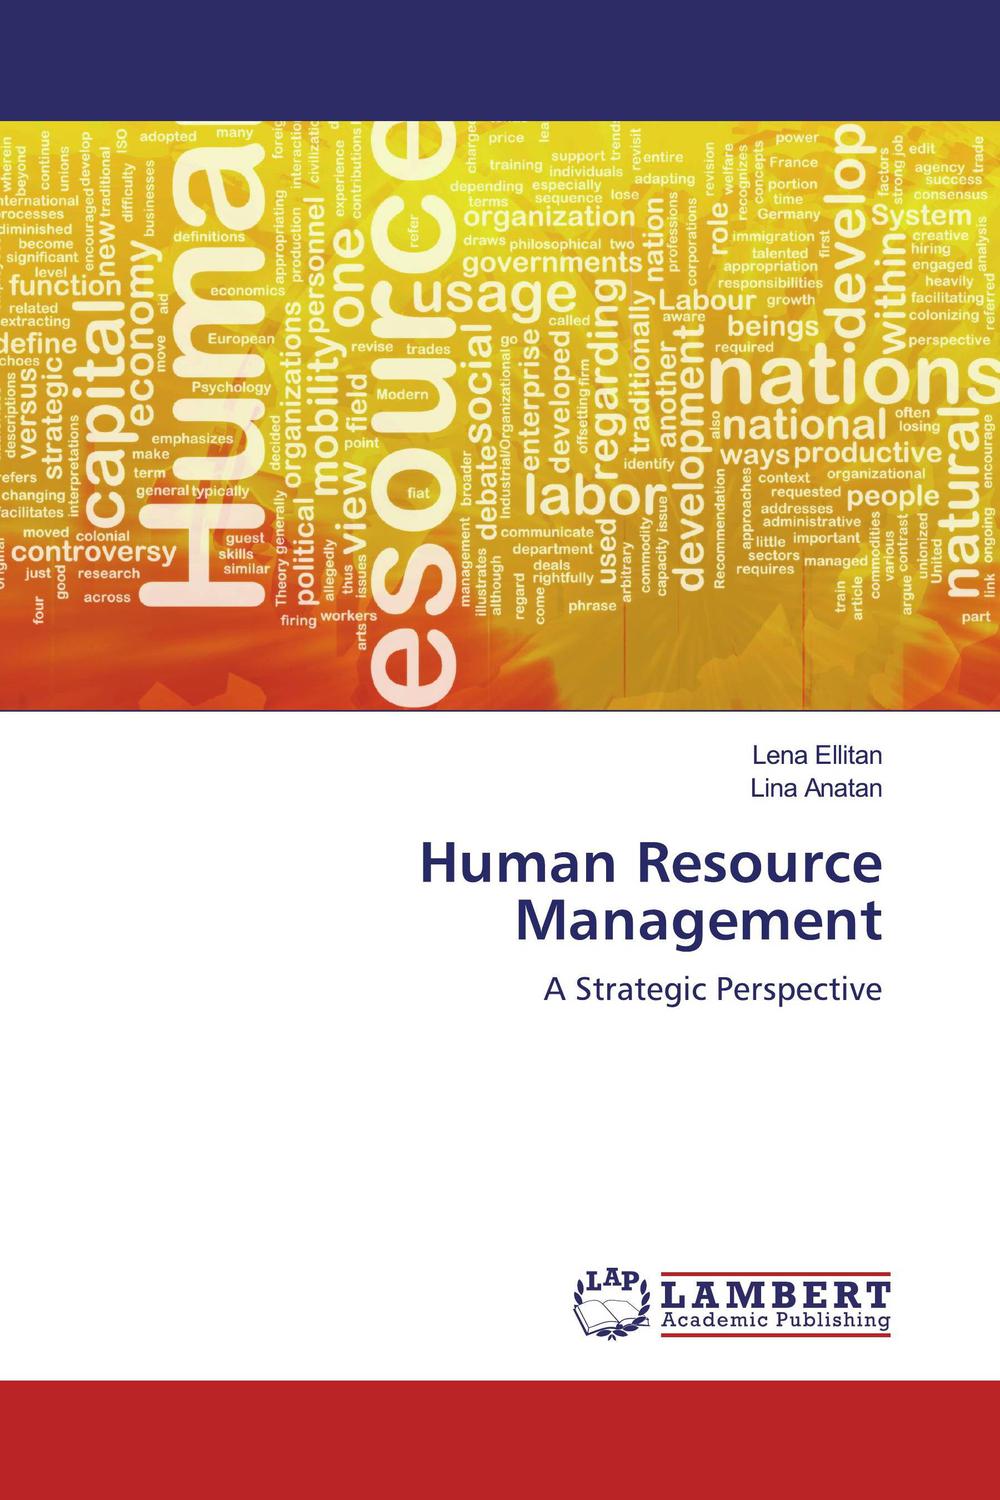 human resource management a strategic perspective 1st edition lena ellitan, lina anatan 6200459339,